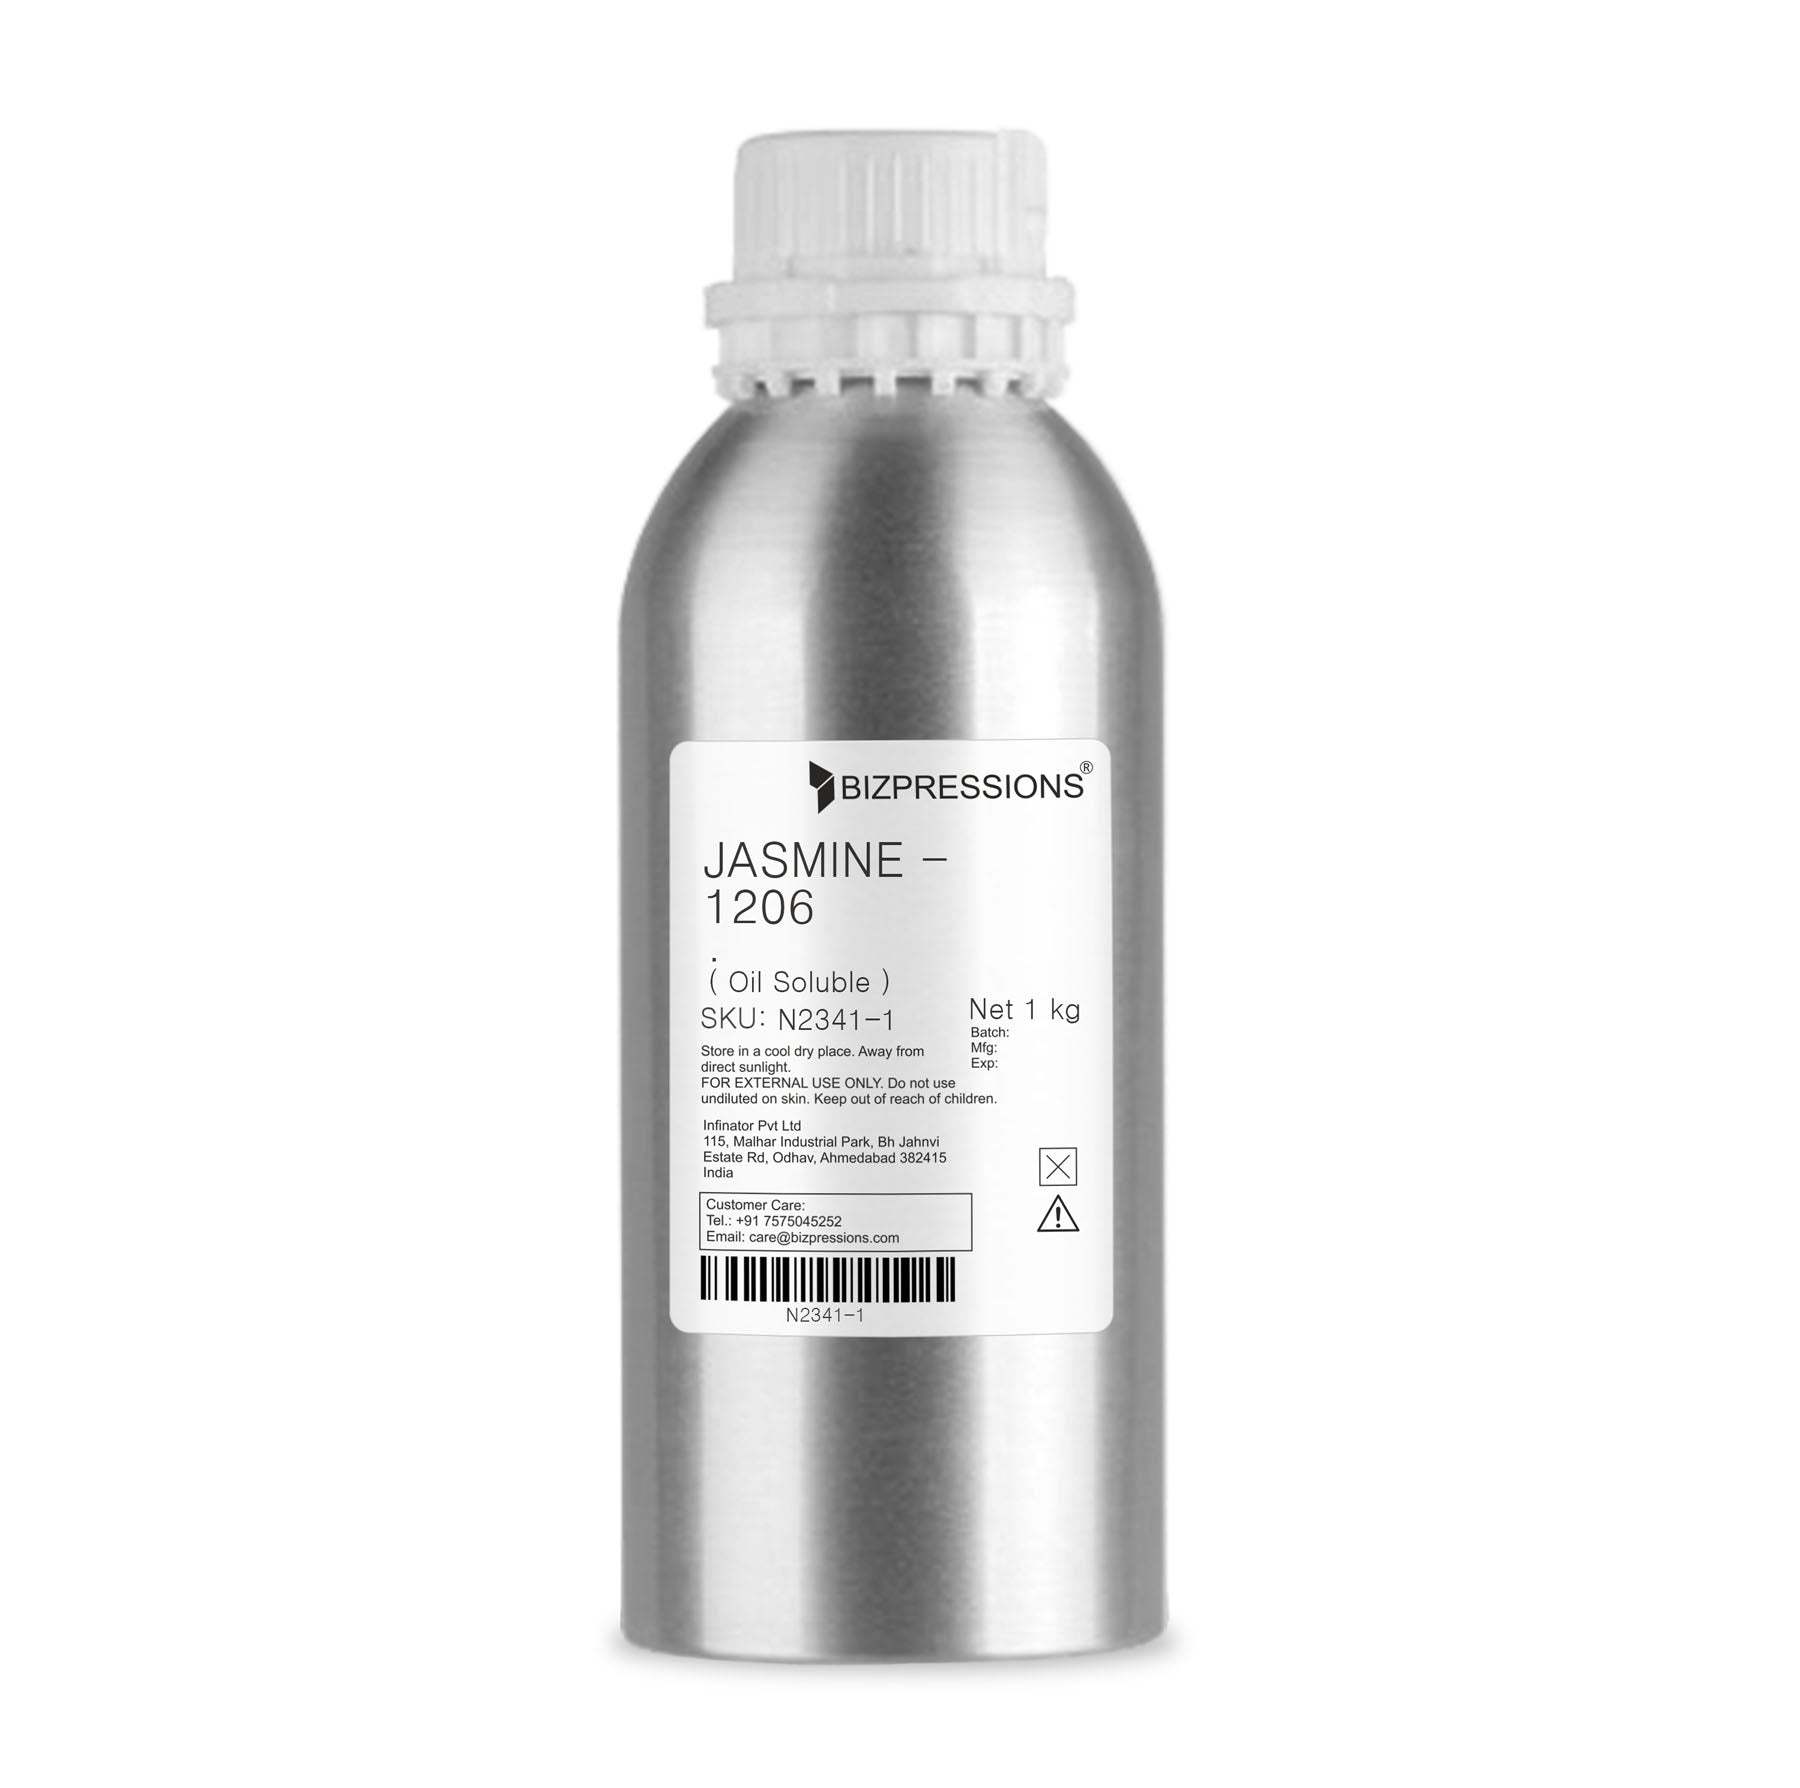 JASMINE - 1206 - Fragrance ( Oil Soluble ) - 1 kg